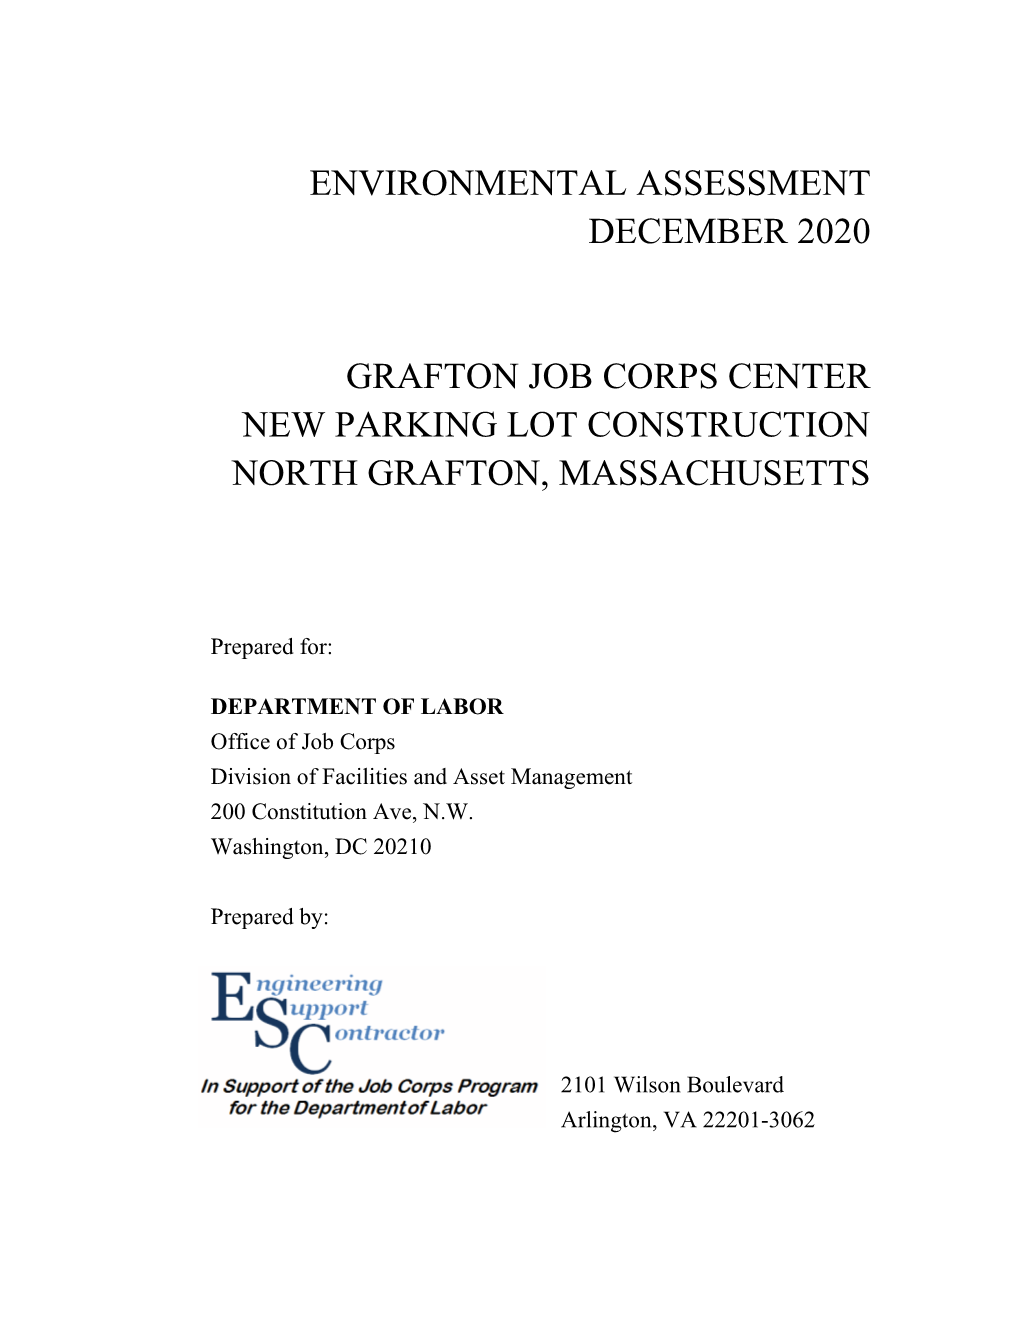 Environmental Assessment December 2020 Grafton Job Corps Center New Parking Lot Construction North Grafton, Massachusetts